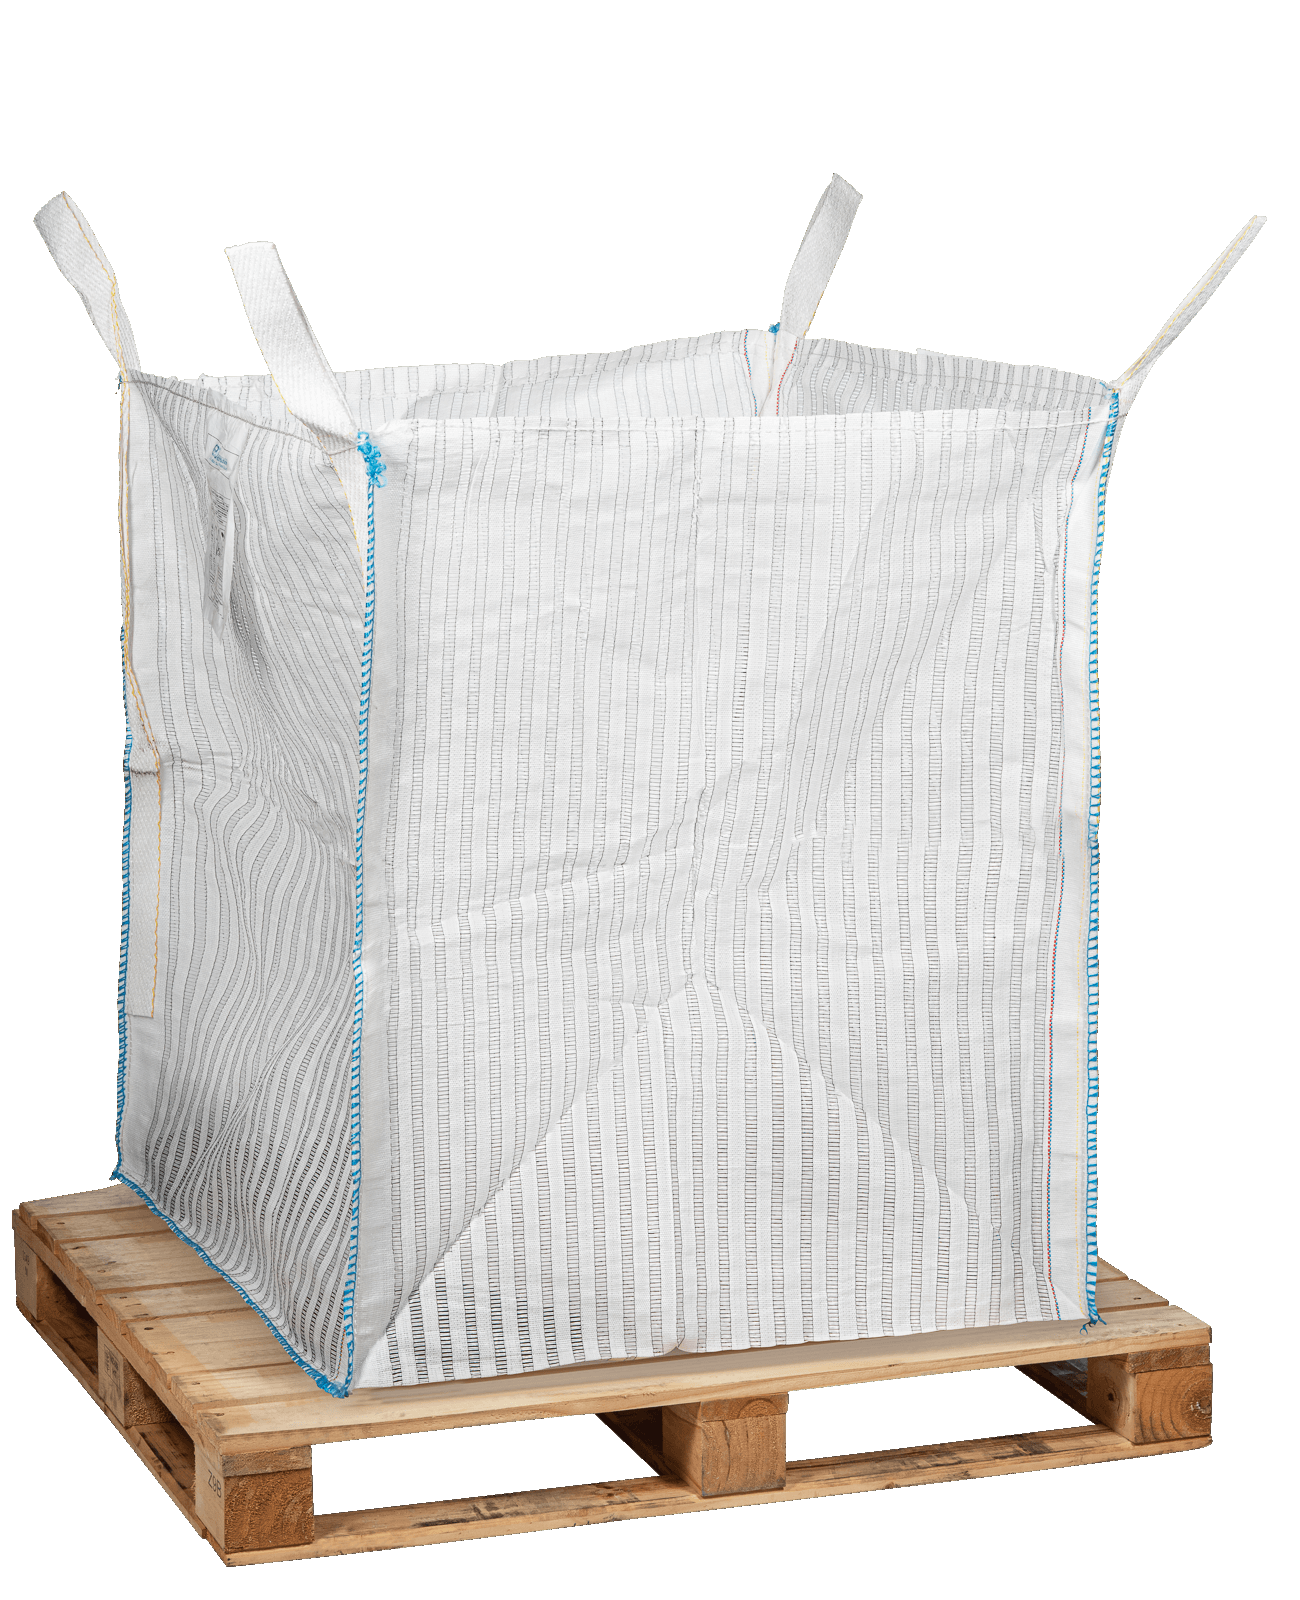 Ventilated big bag (1 cubic meter)